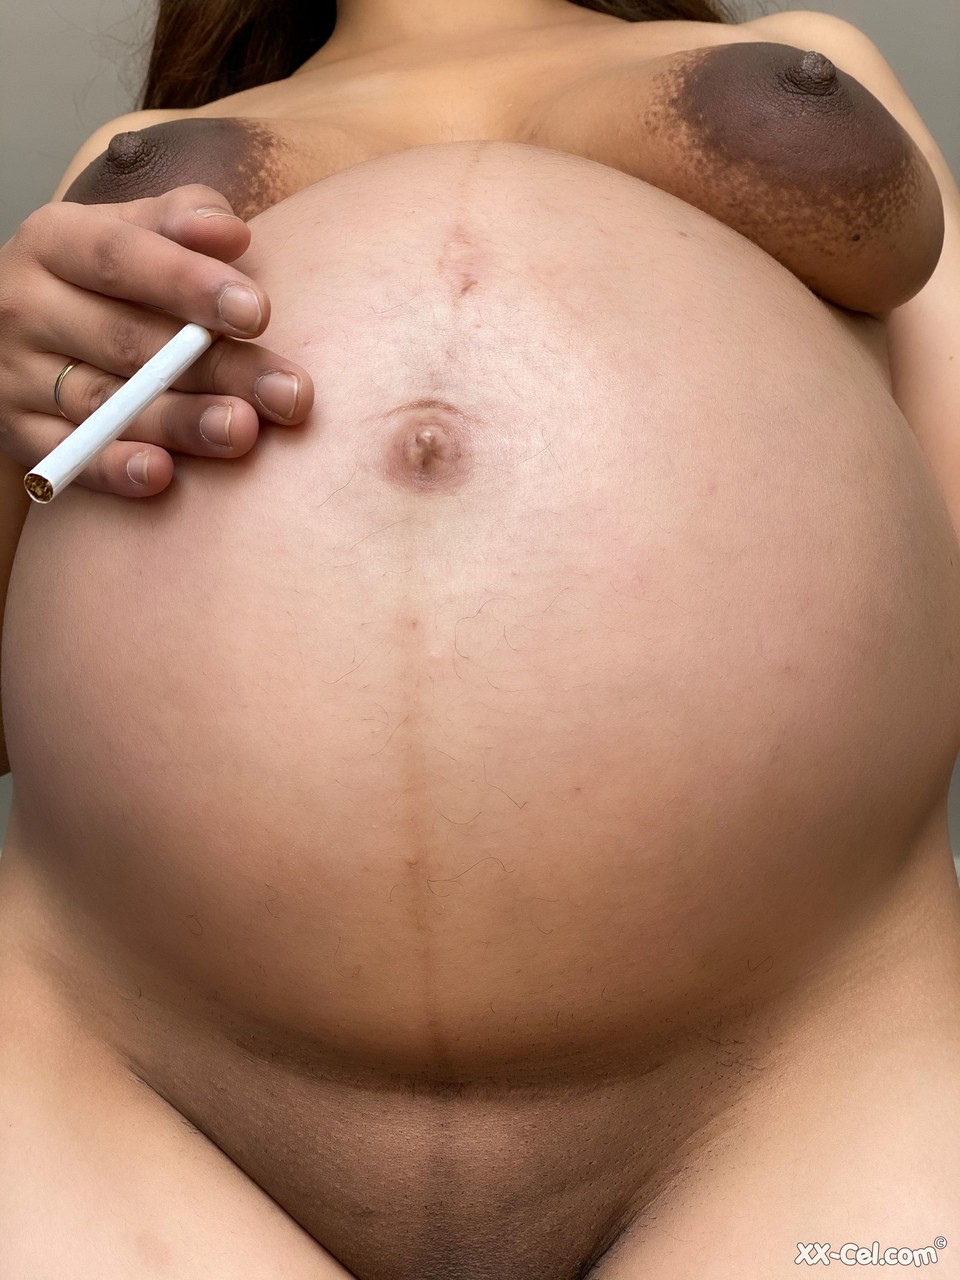 Pregnant smoker Leila teasing nude with her bulging tummy & her dark nipples ポルノ写真 #424132694 | XX Cel Pics, Leila, Pregnant, モバイルポルノ